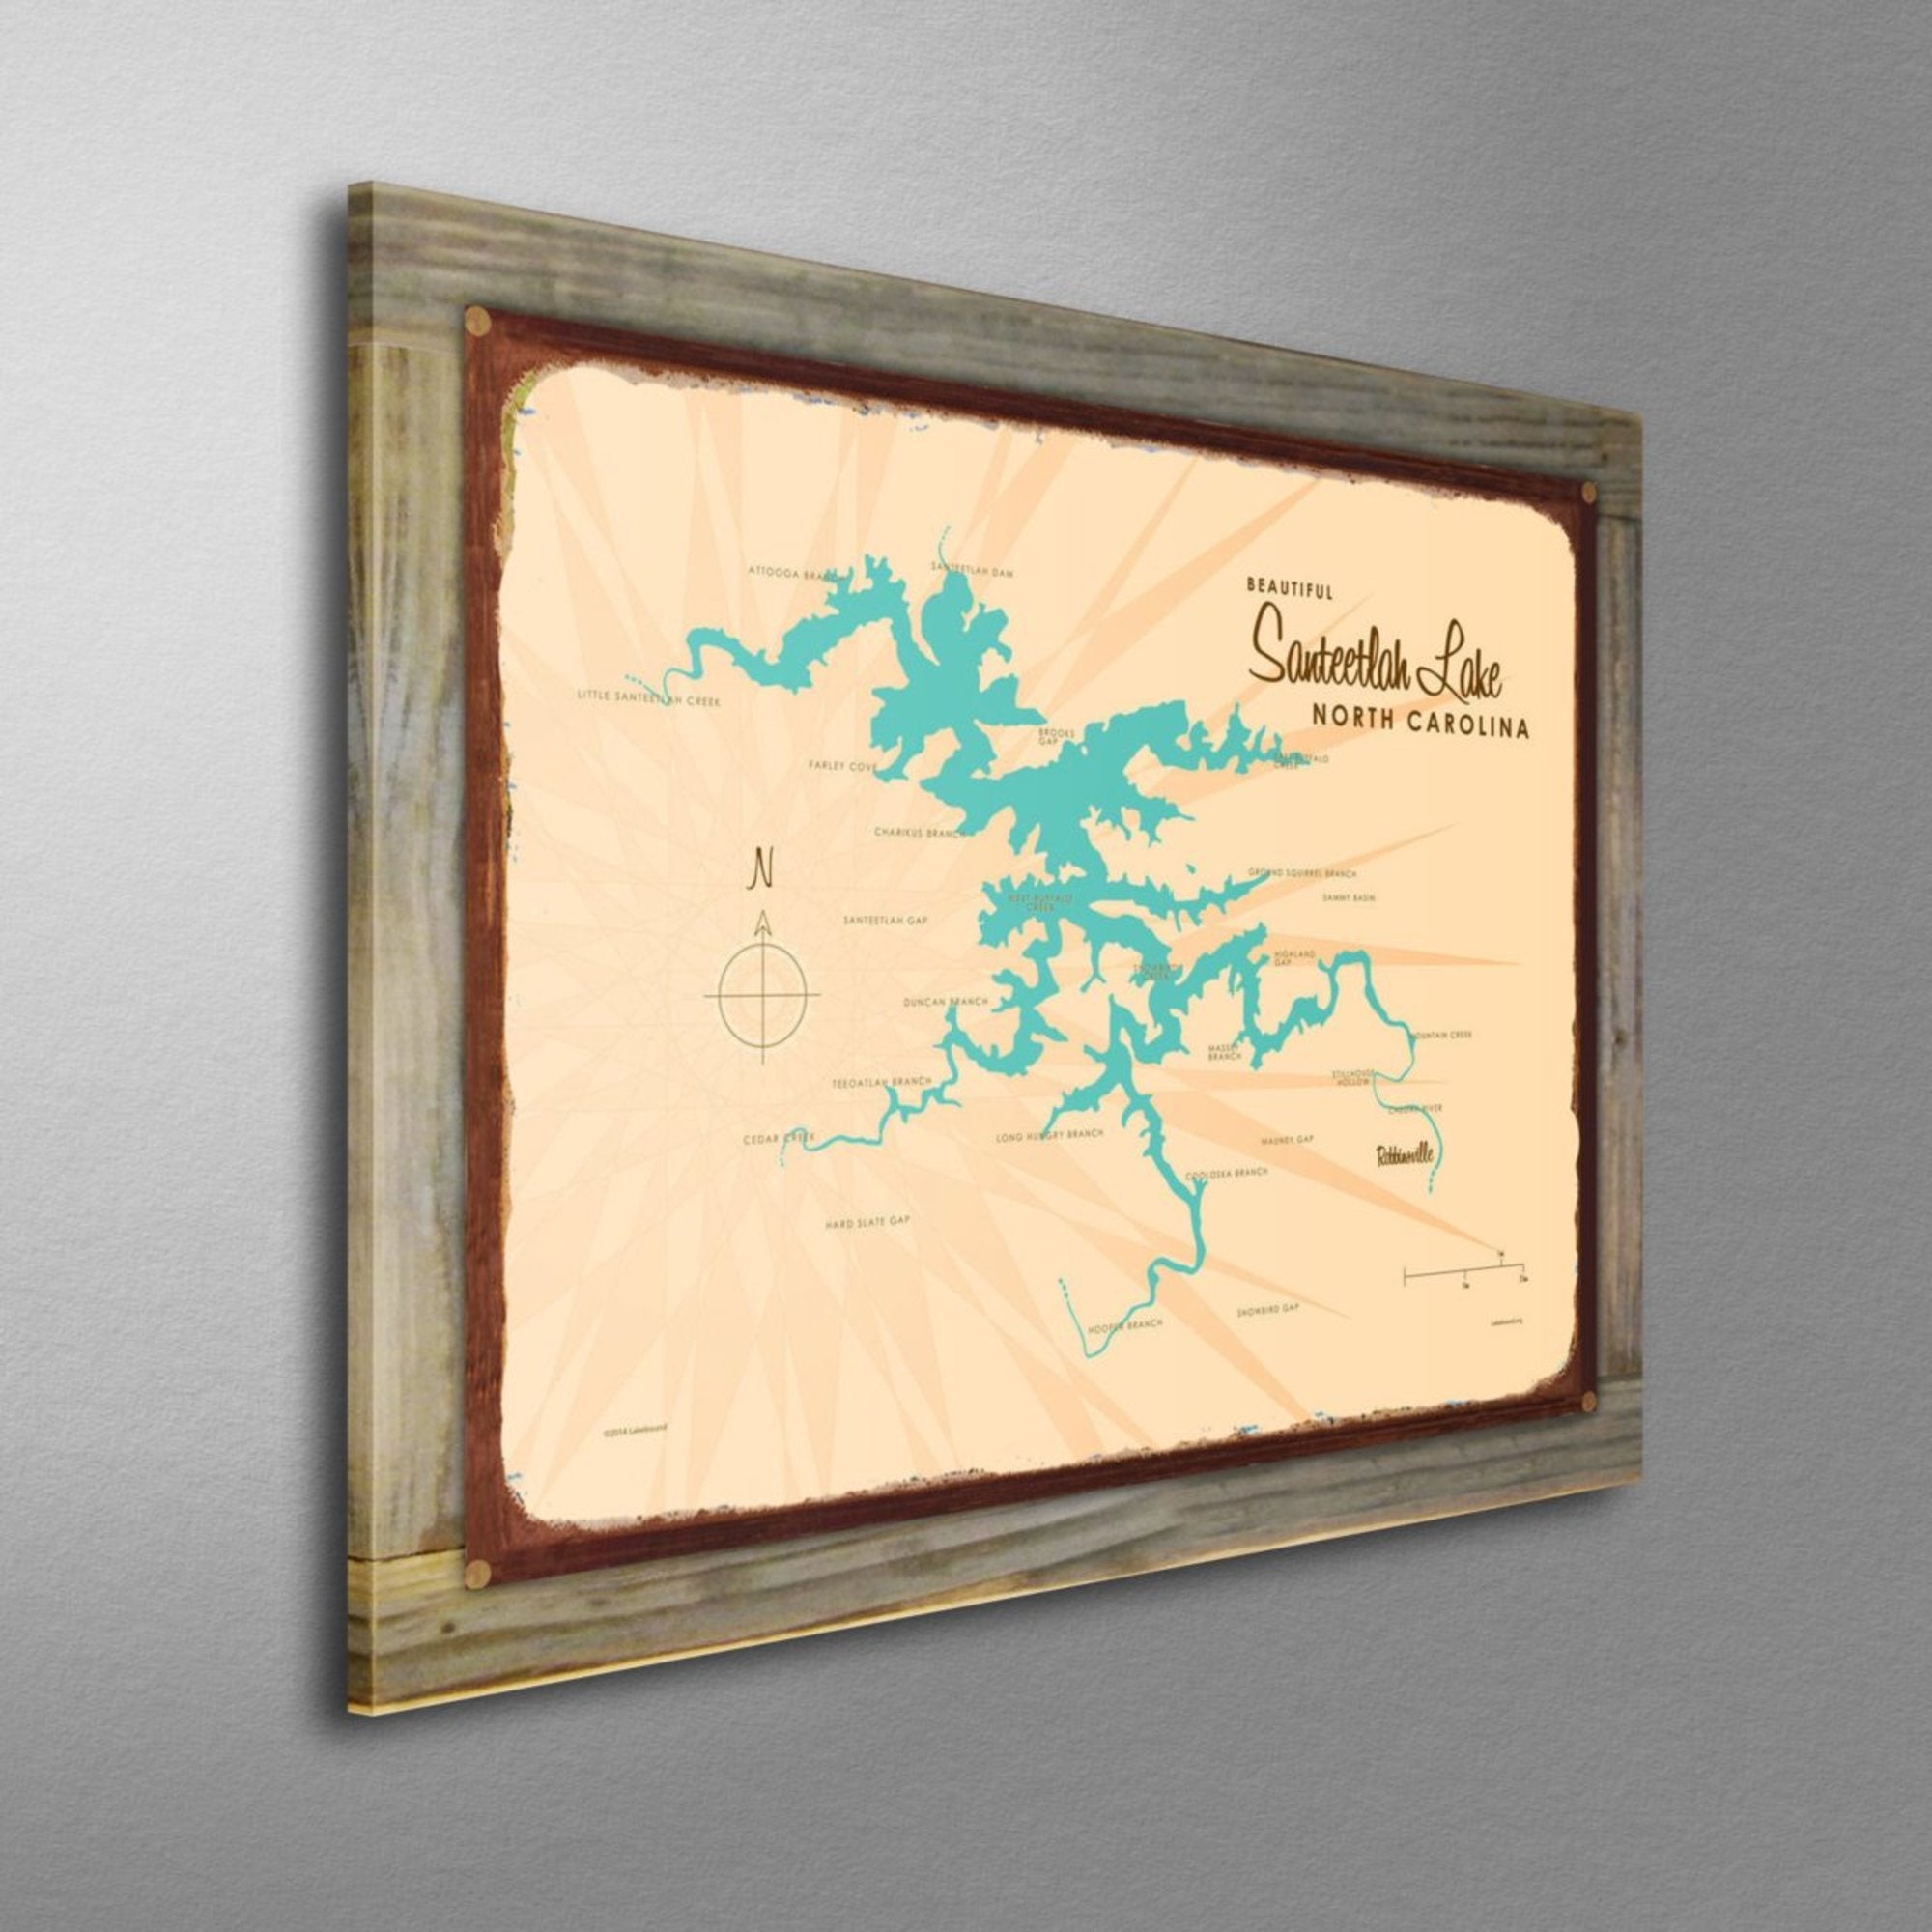 Santeetlah Lake North Carolina, Wood-Mounted Rustic Metal Sign Map Art